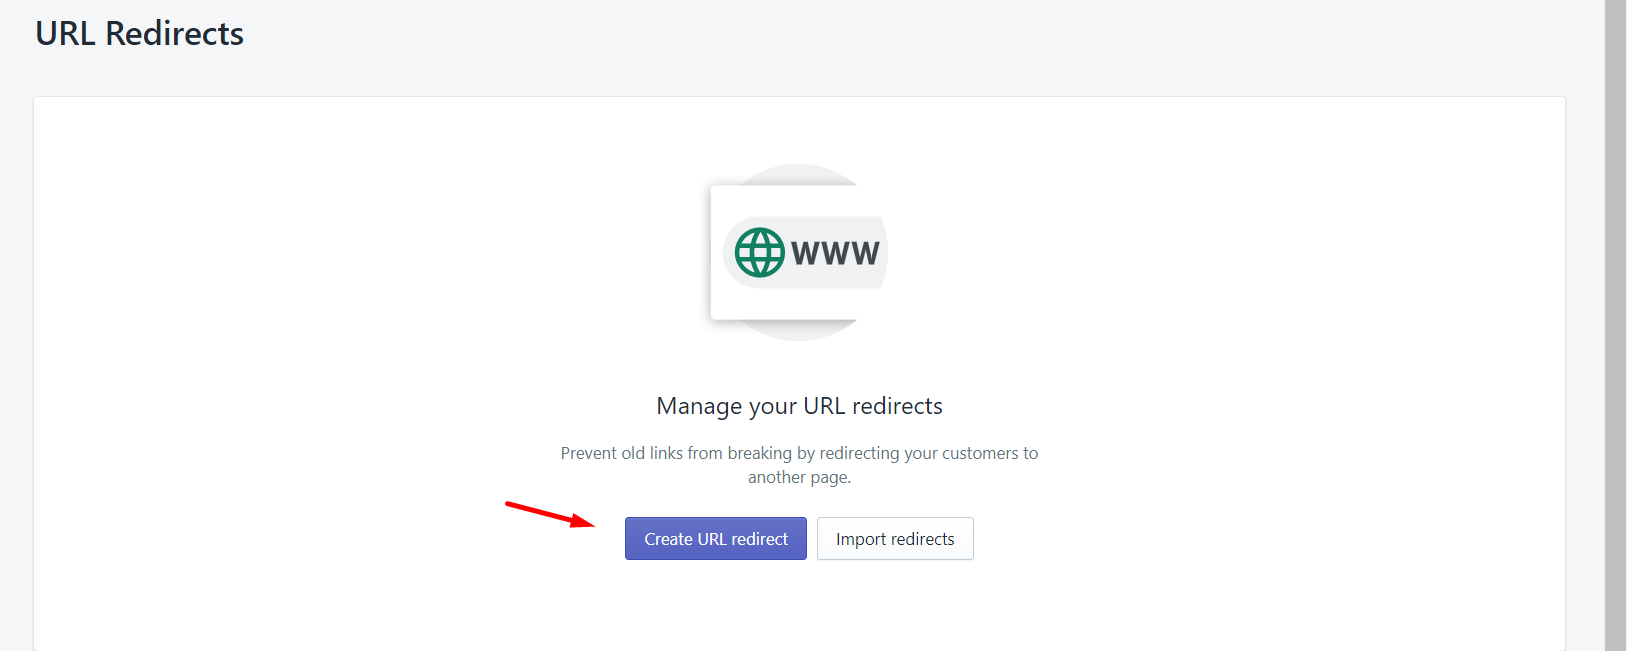 Click Create URL redirect